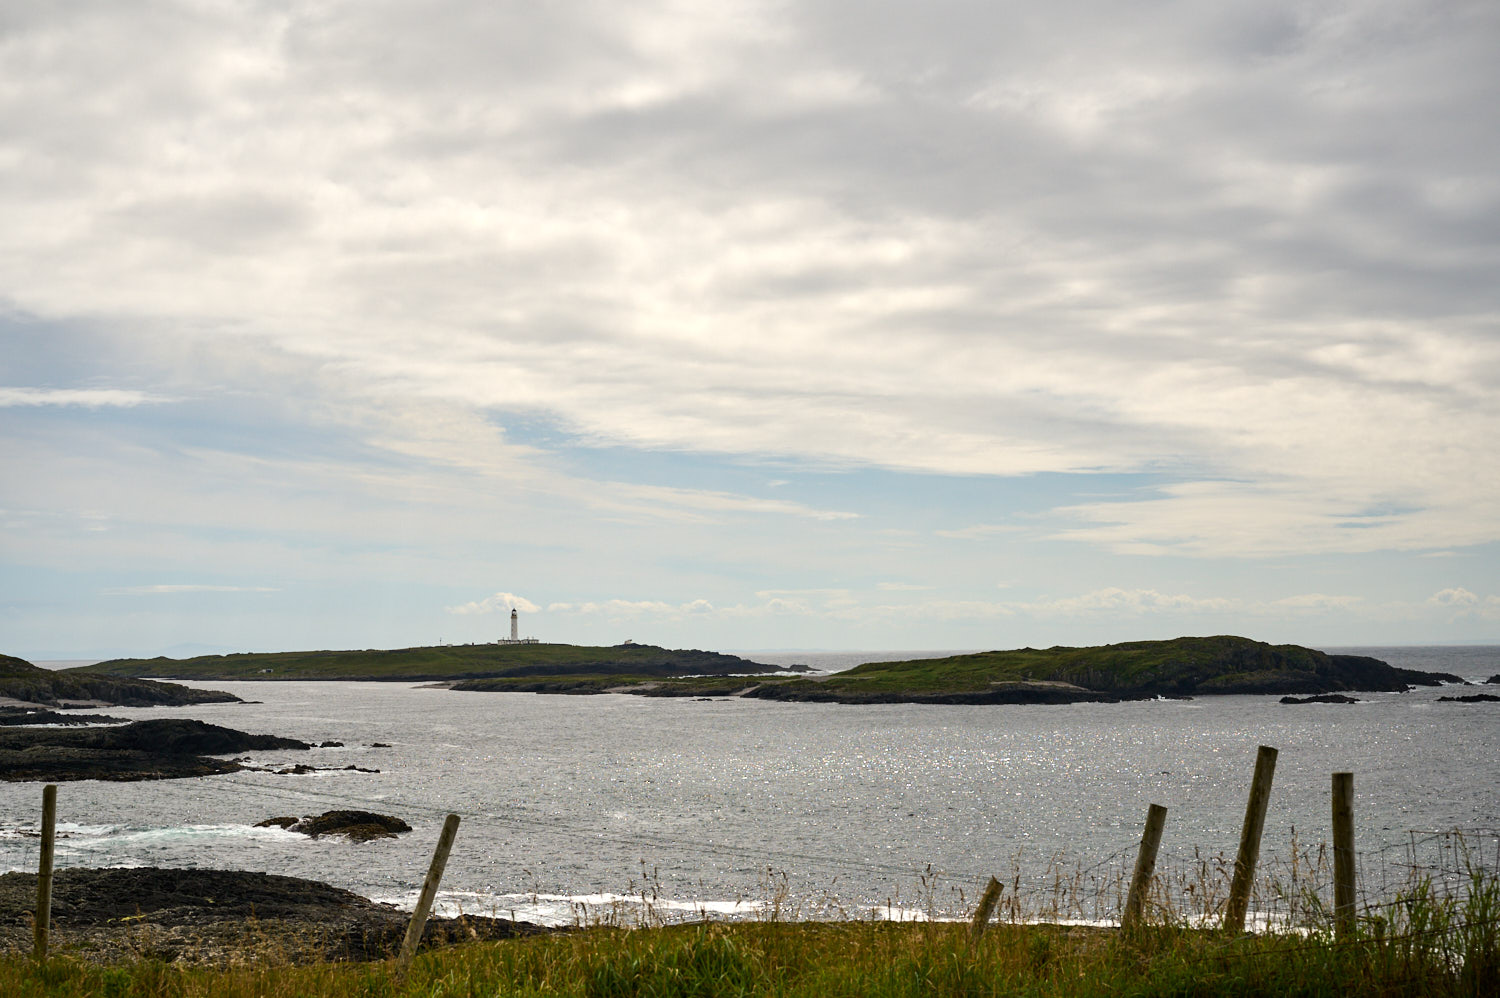 Walking through Port Wemyss in the Isle of Islay